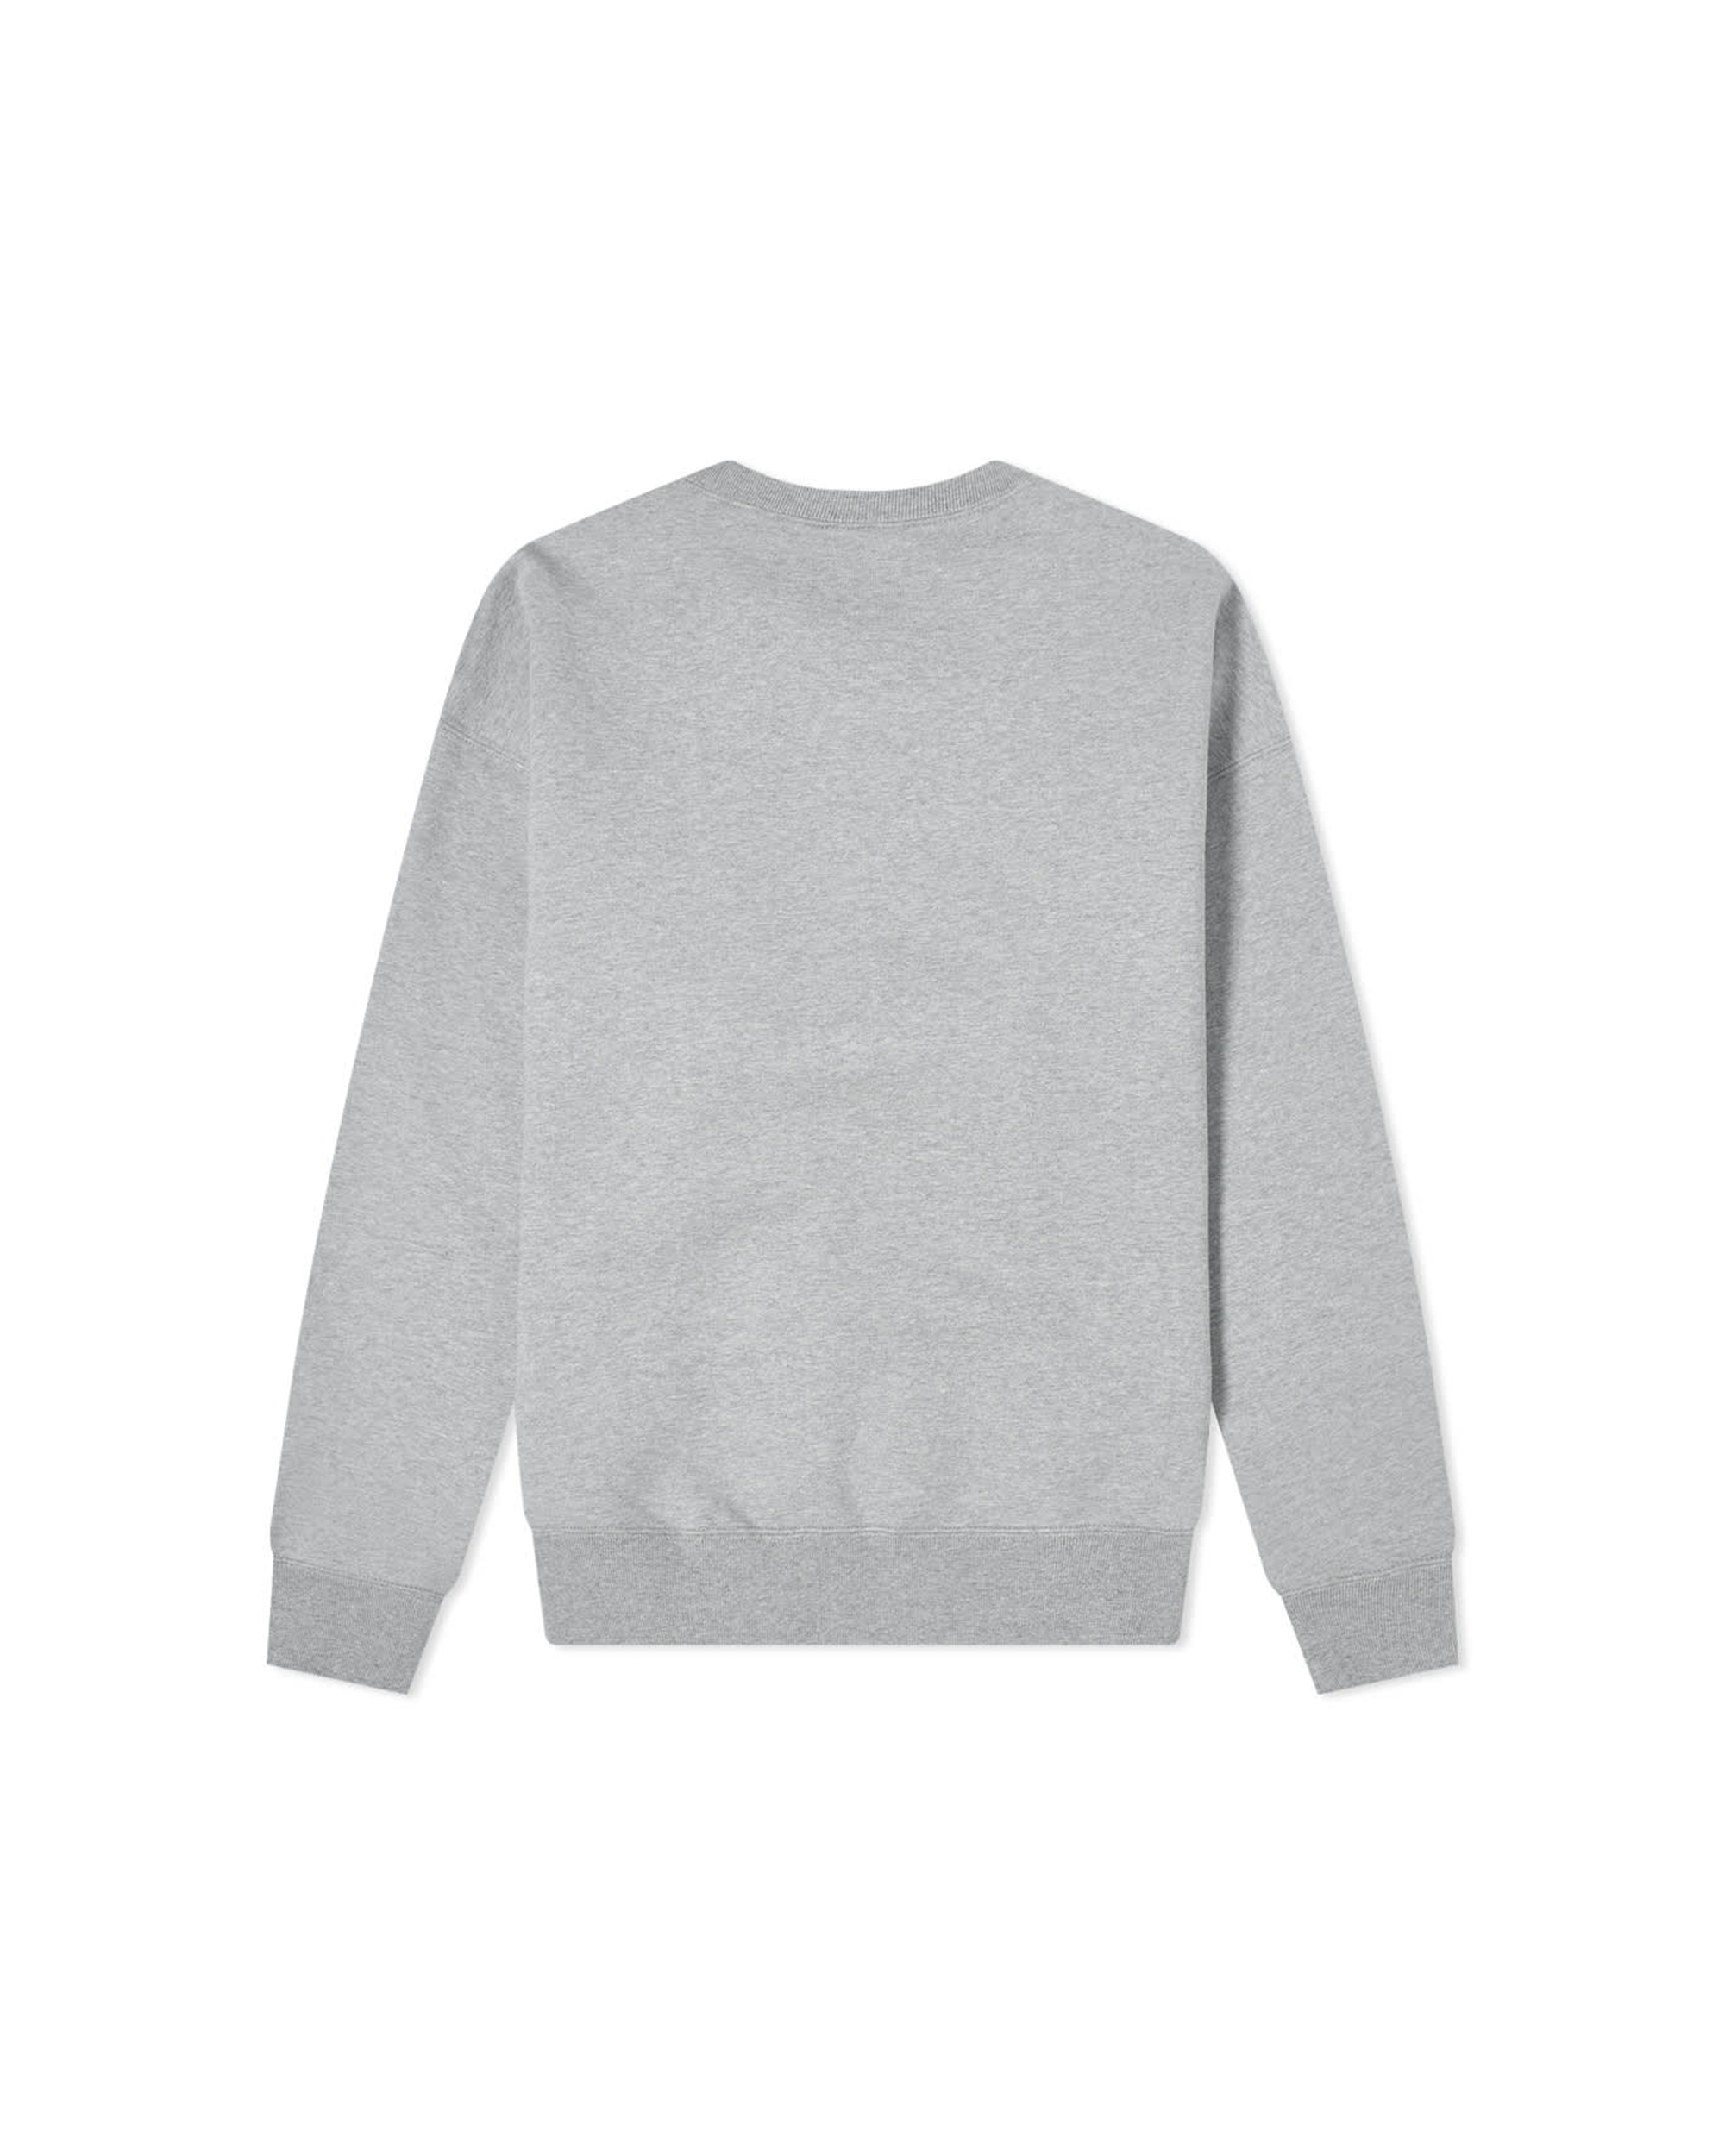 NRG Crewneck Sweatshirt - Dark Grey / Heather White